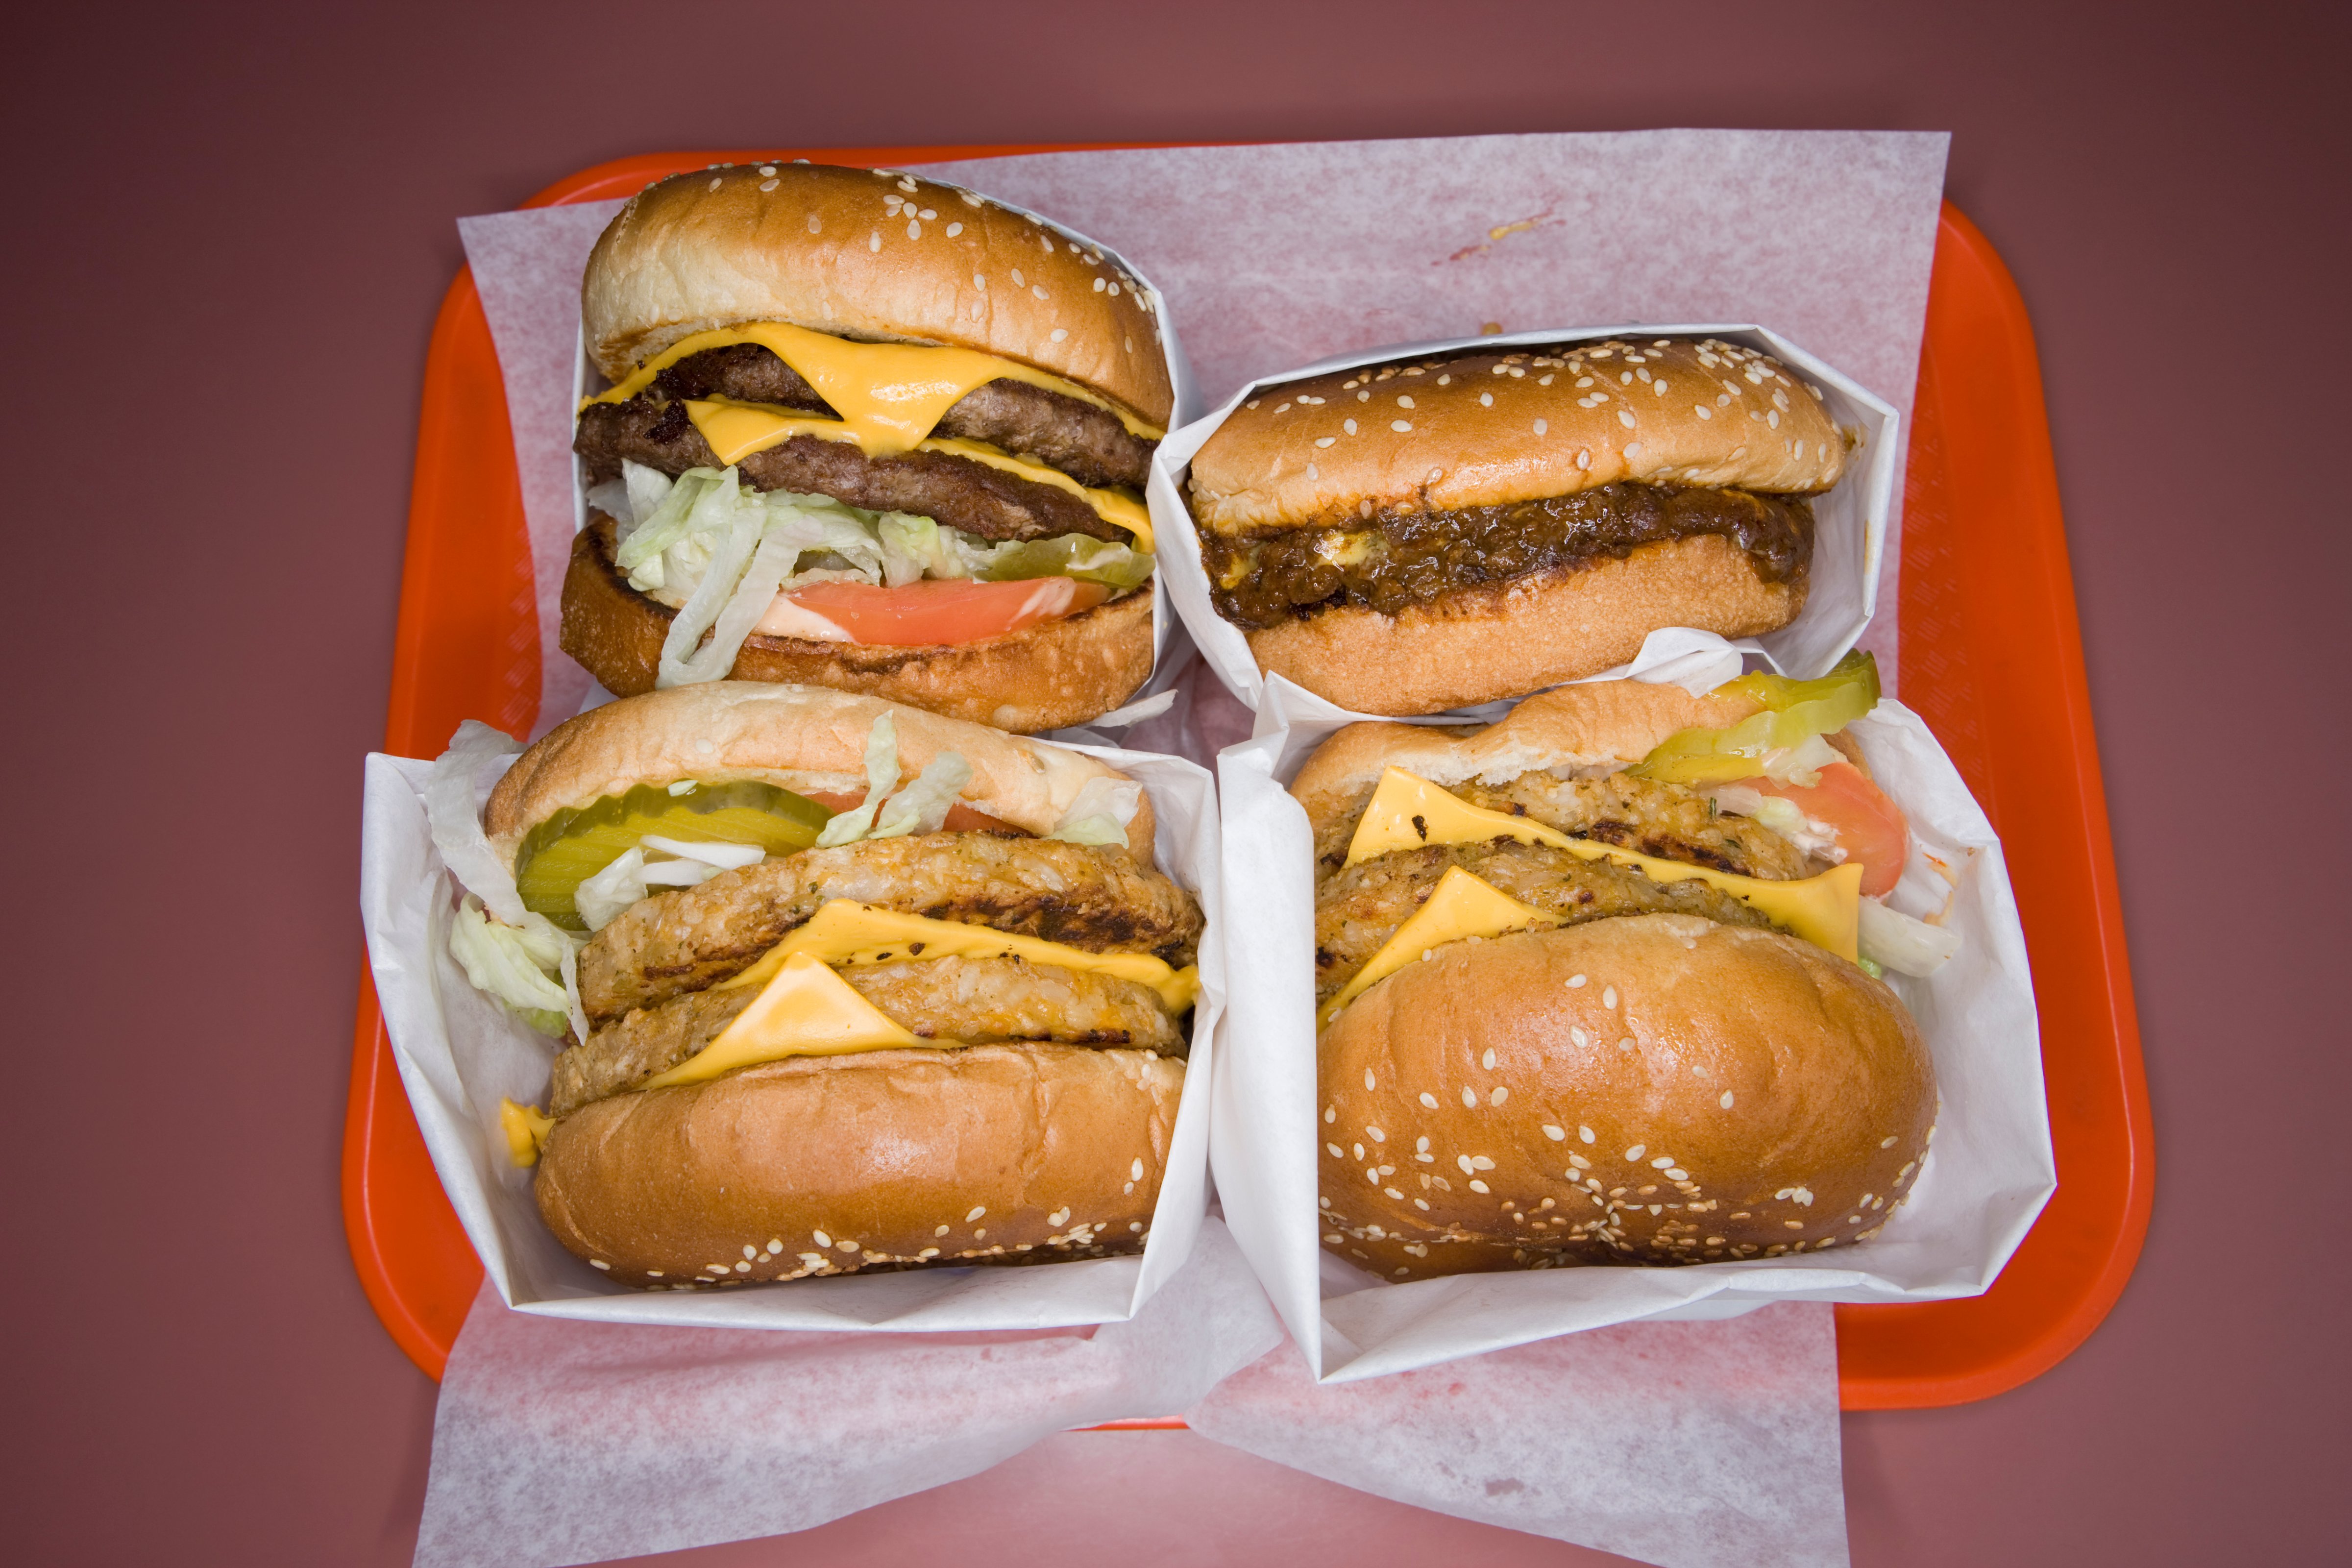 a fast food tray full of hamburgers